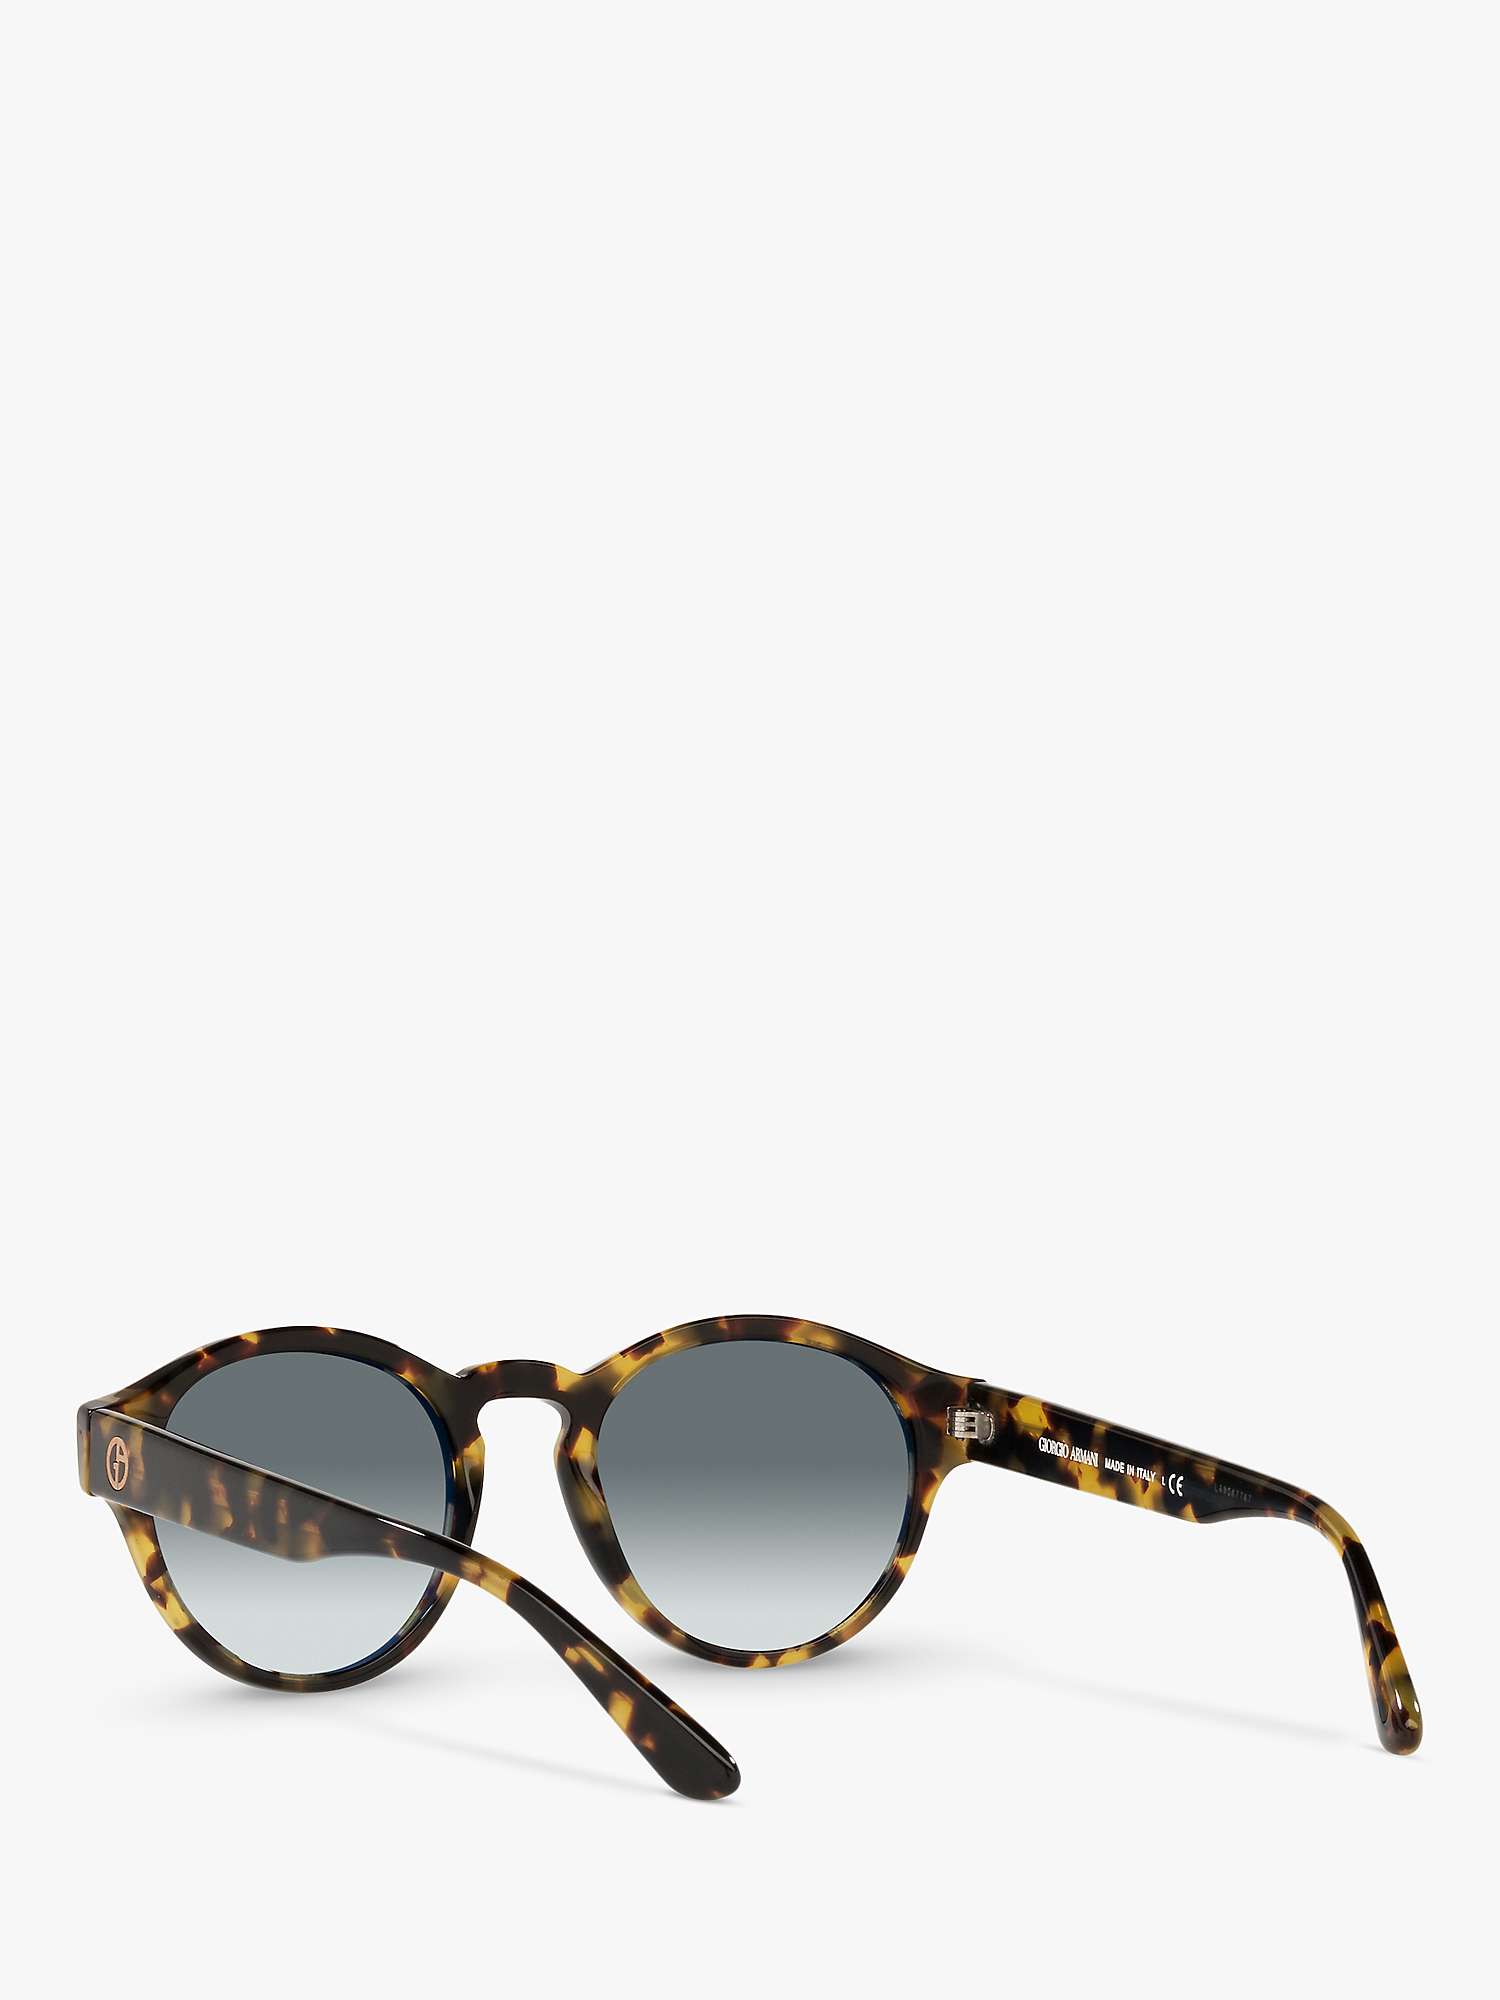 Buy Giorgio Armani AR8146 Women's Oval Sunglasses, Yellow Havana/Grey Gradient Online at johnlewis.com